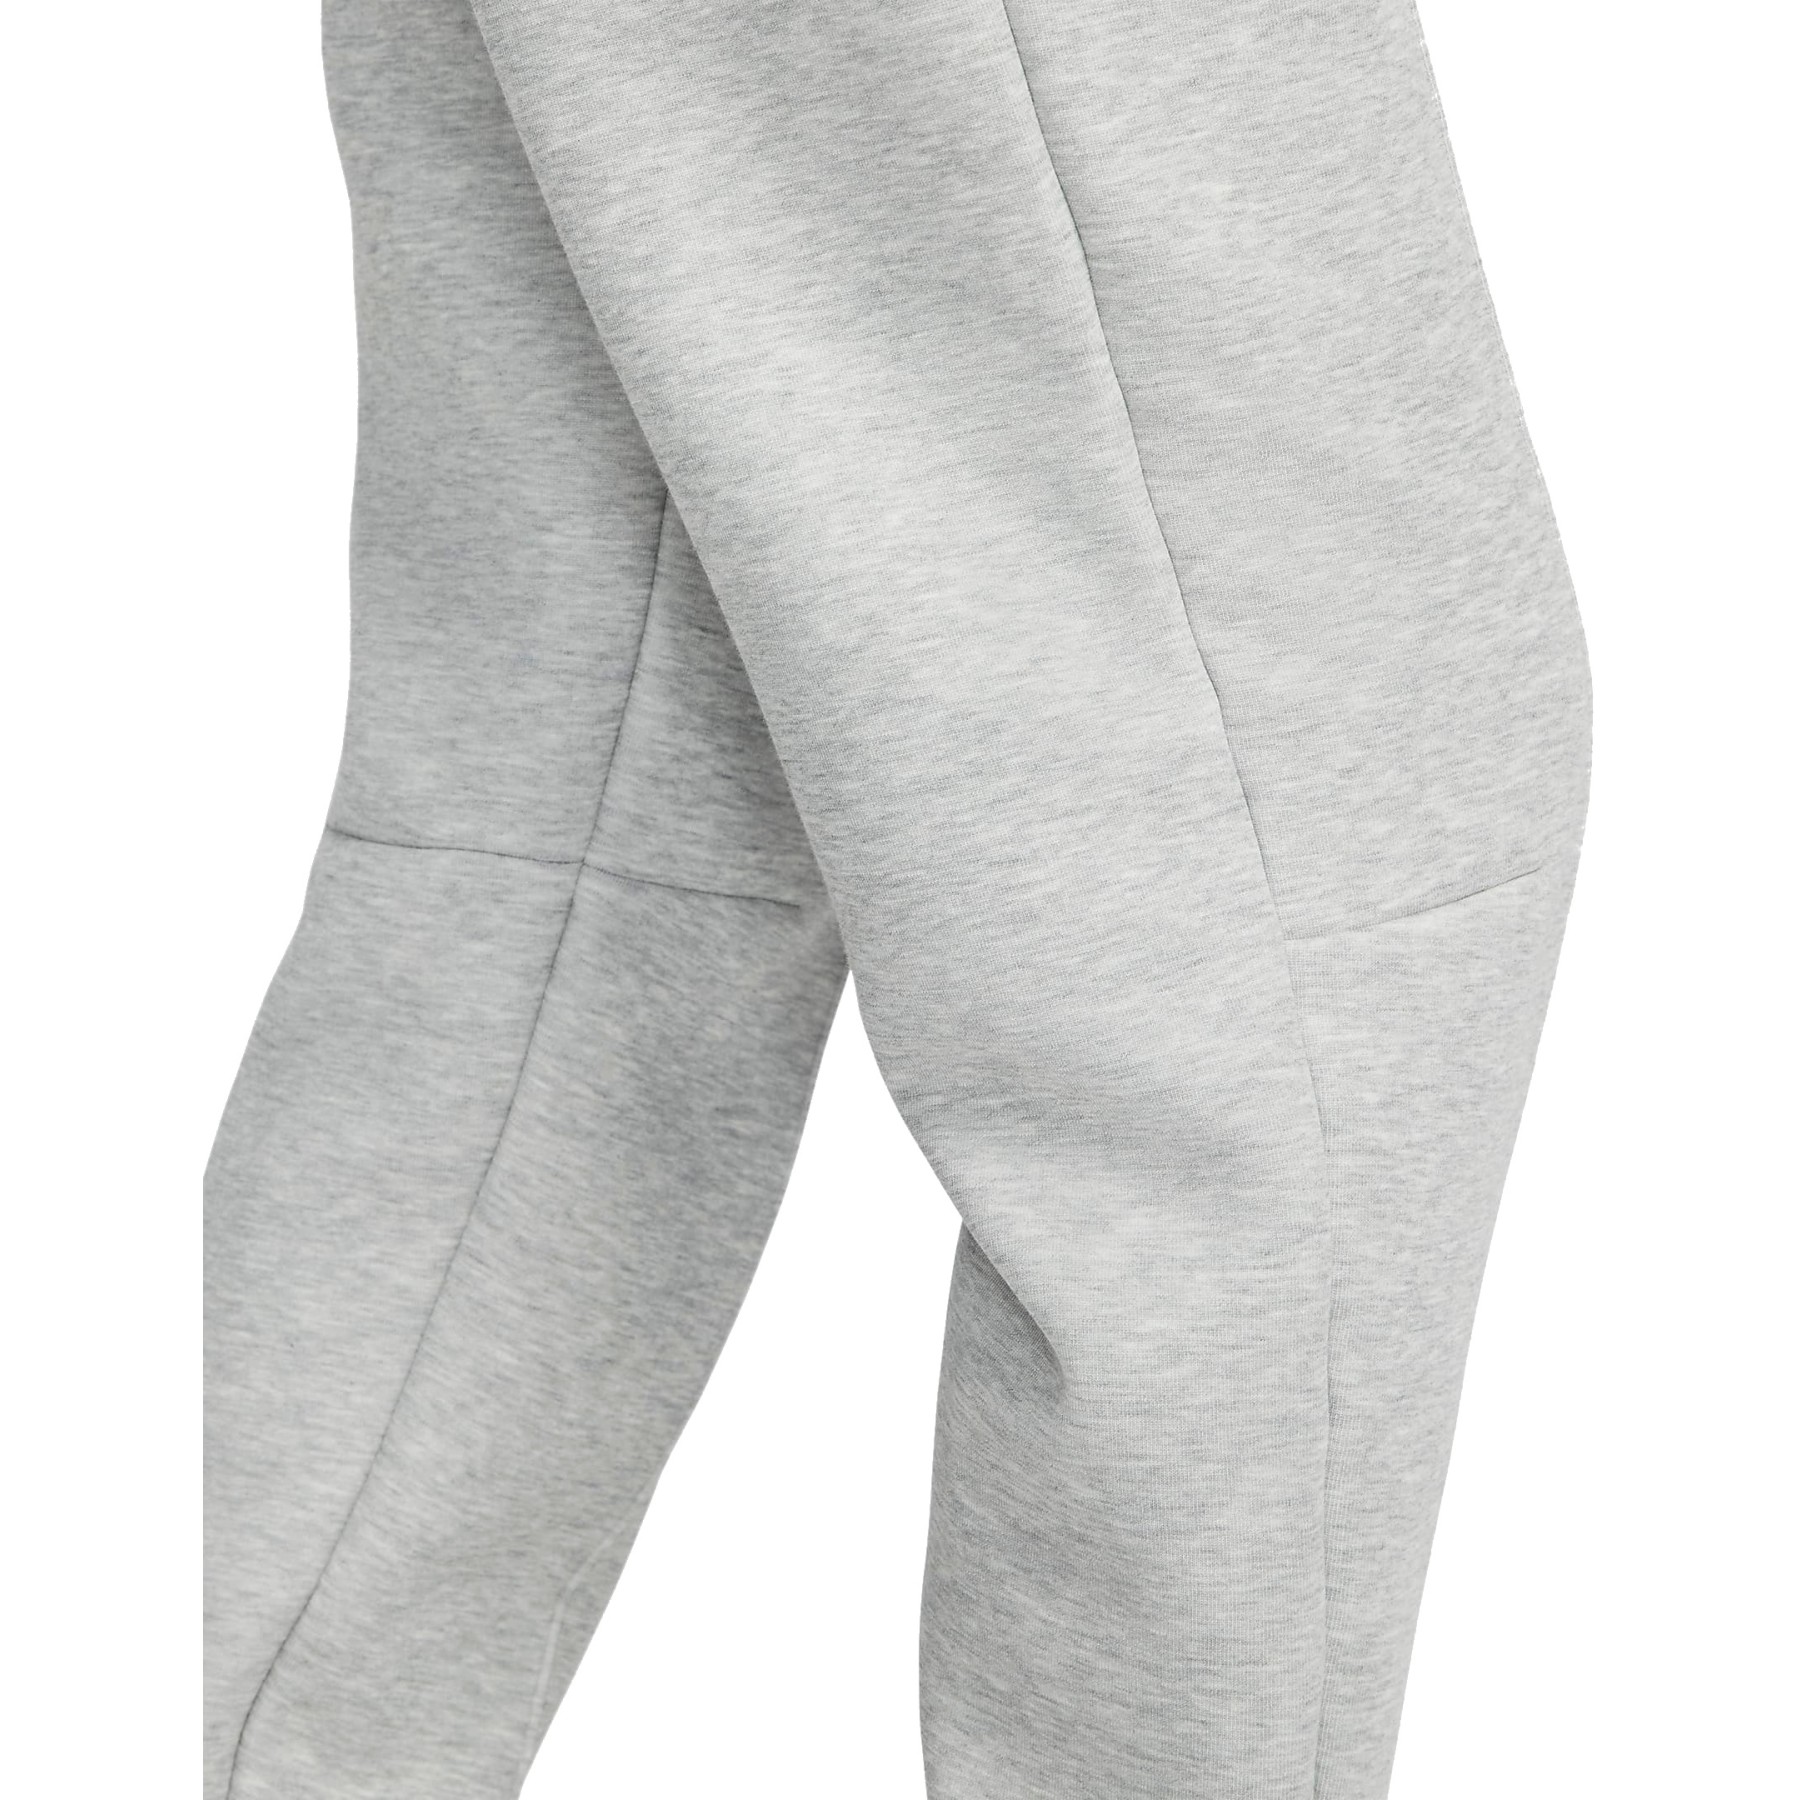 Nike Wmns Tech Fleece Pants Hthr Grey FB8330 013 - Athlete's Choice